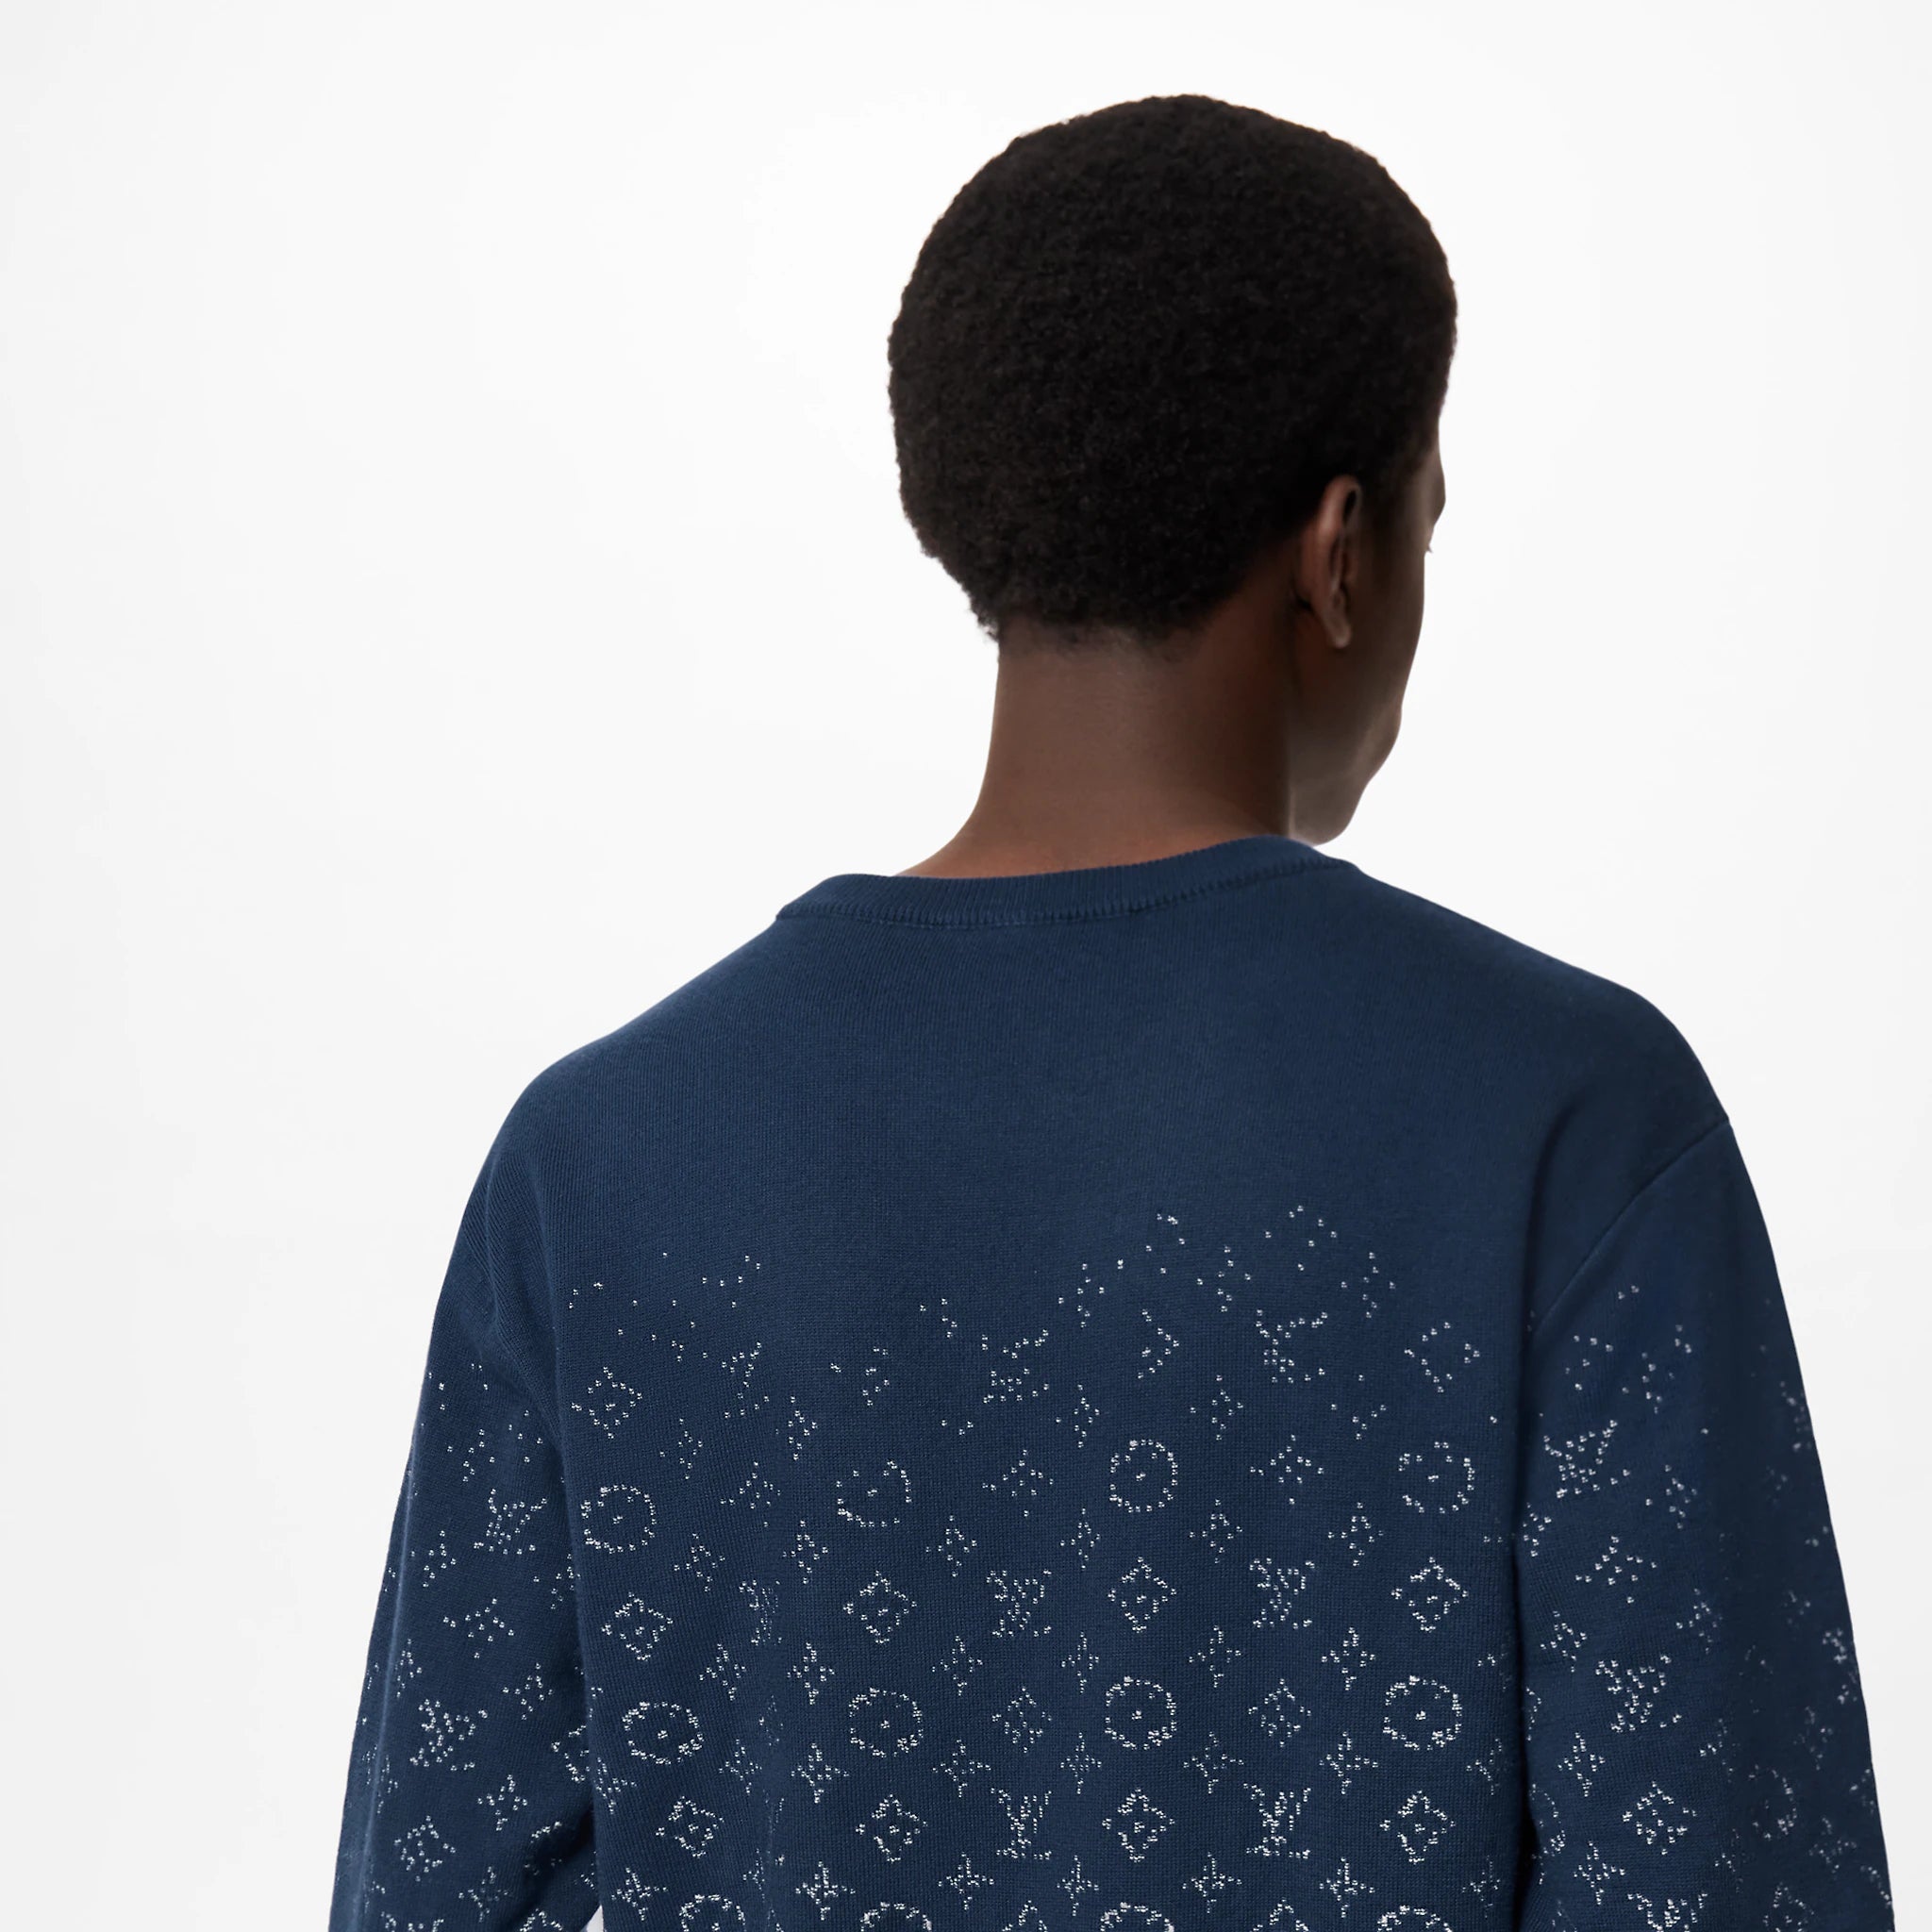 NWT Authentic Louis Vuitton Monogram Degrade Crew neck Sweater